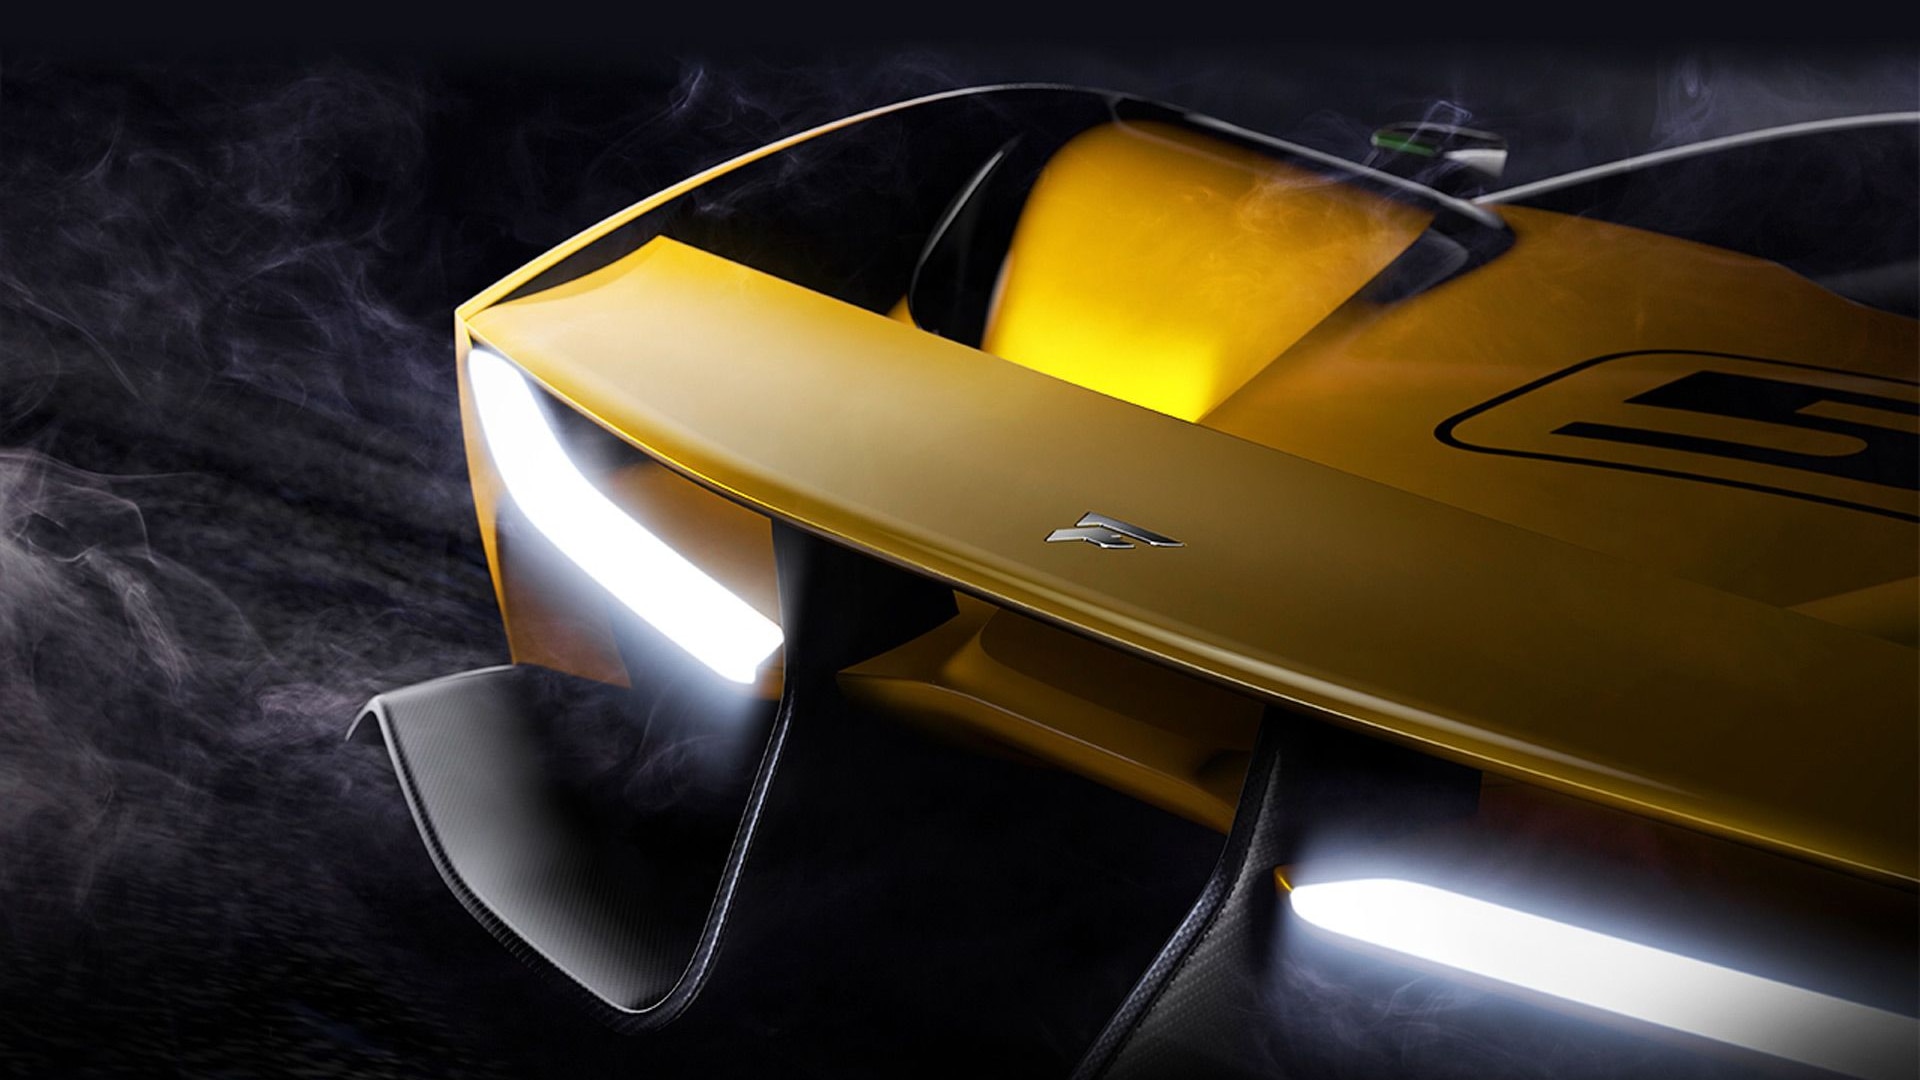 Teaser for Fittipaldi EF7 Vision Gran Turismo by Pininfarina debuting at 2017 Geneva auto show